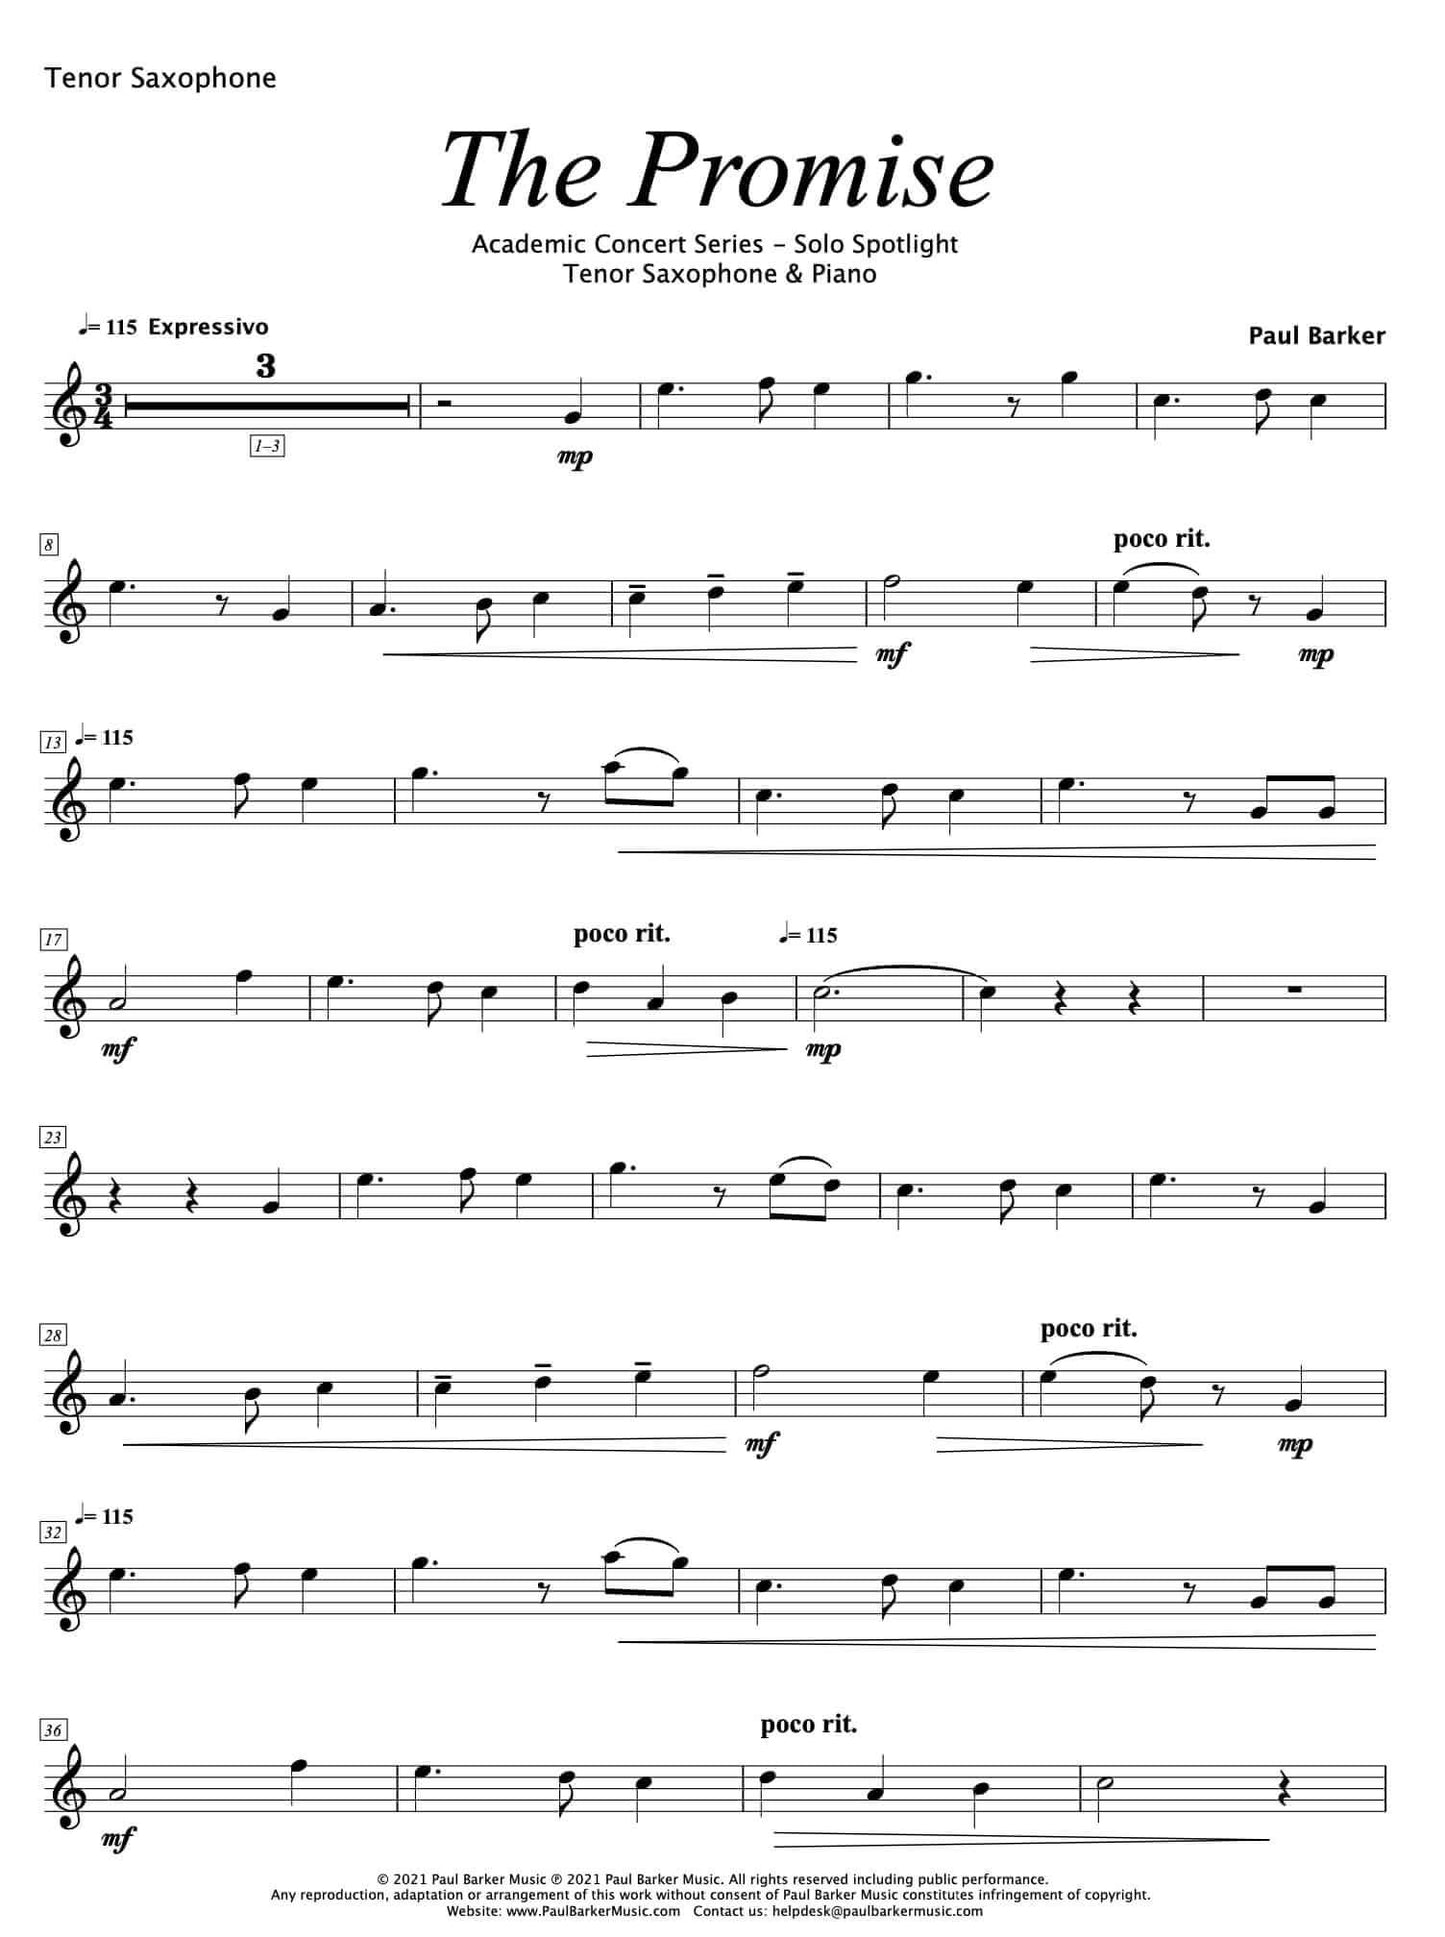 The Promise [Tenor Saxophone & Piano] - Paul Barker Music 